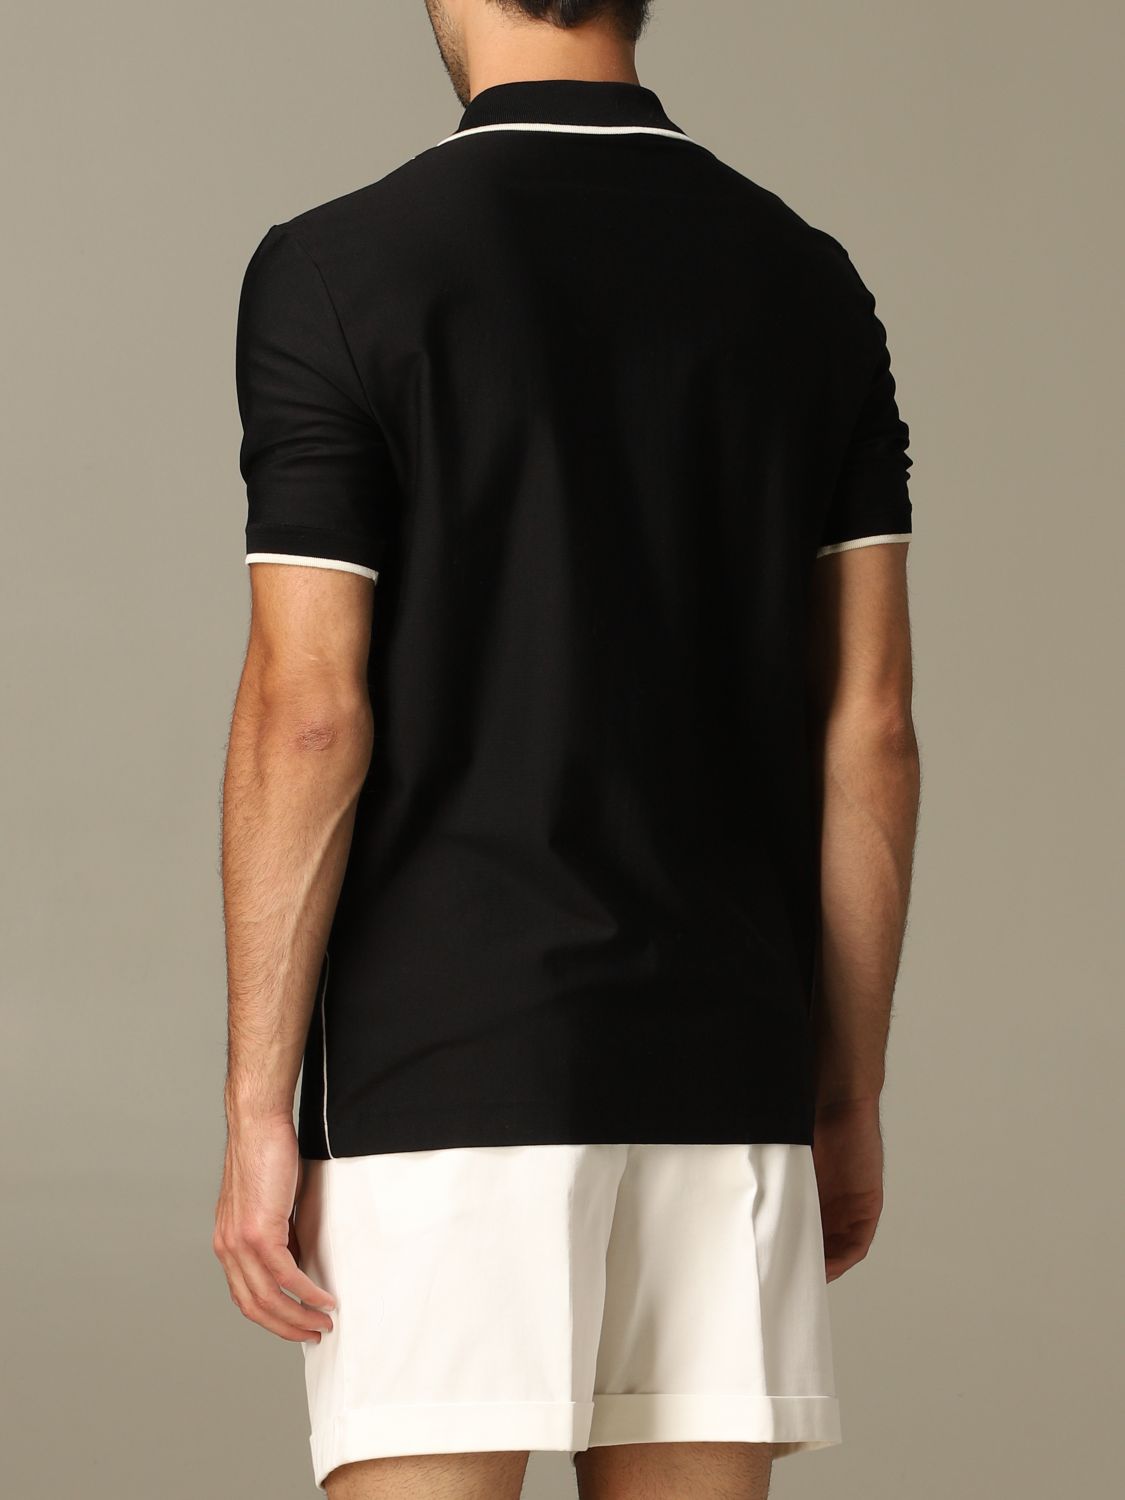 DOLCE & GABBANA: Shirt men | Shirt Dolce & Gabbana Men Black | Shirt